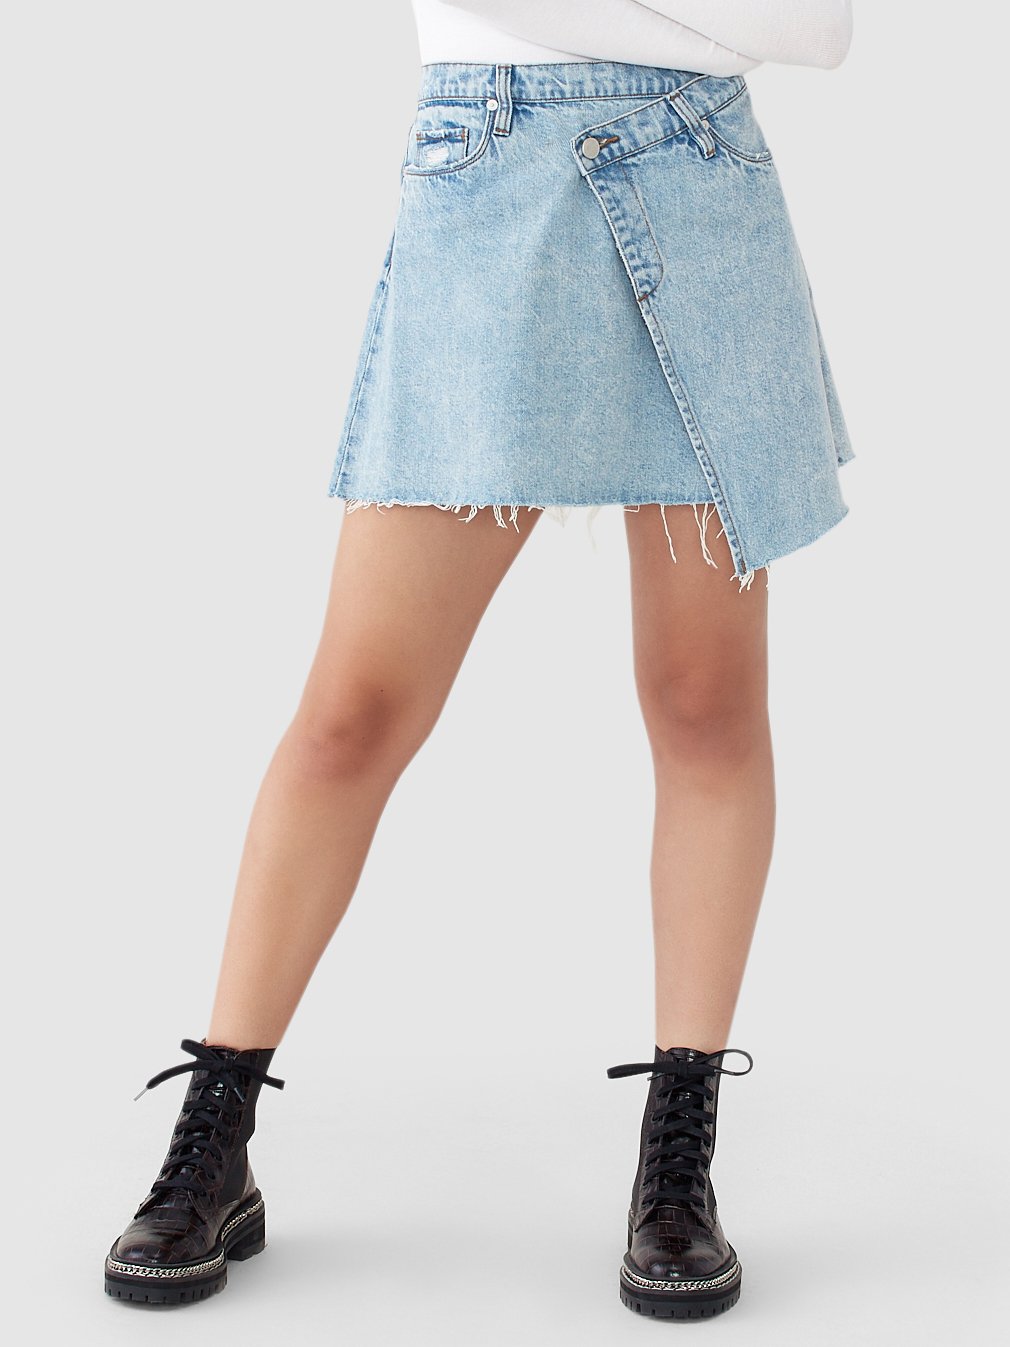 blanknyc asymmetrical skirt